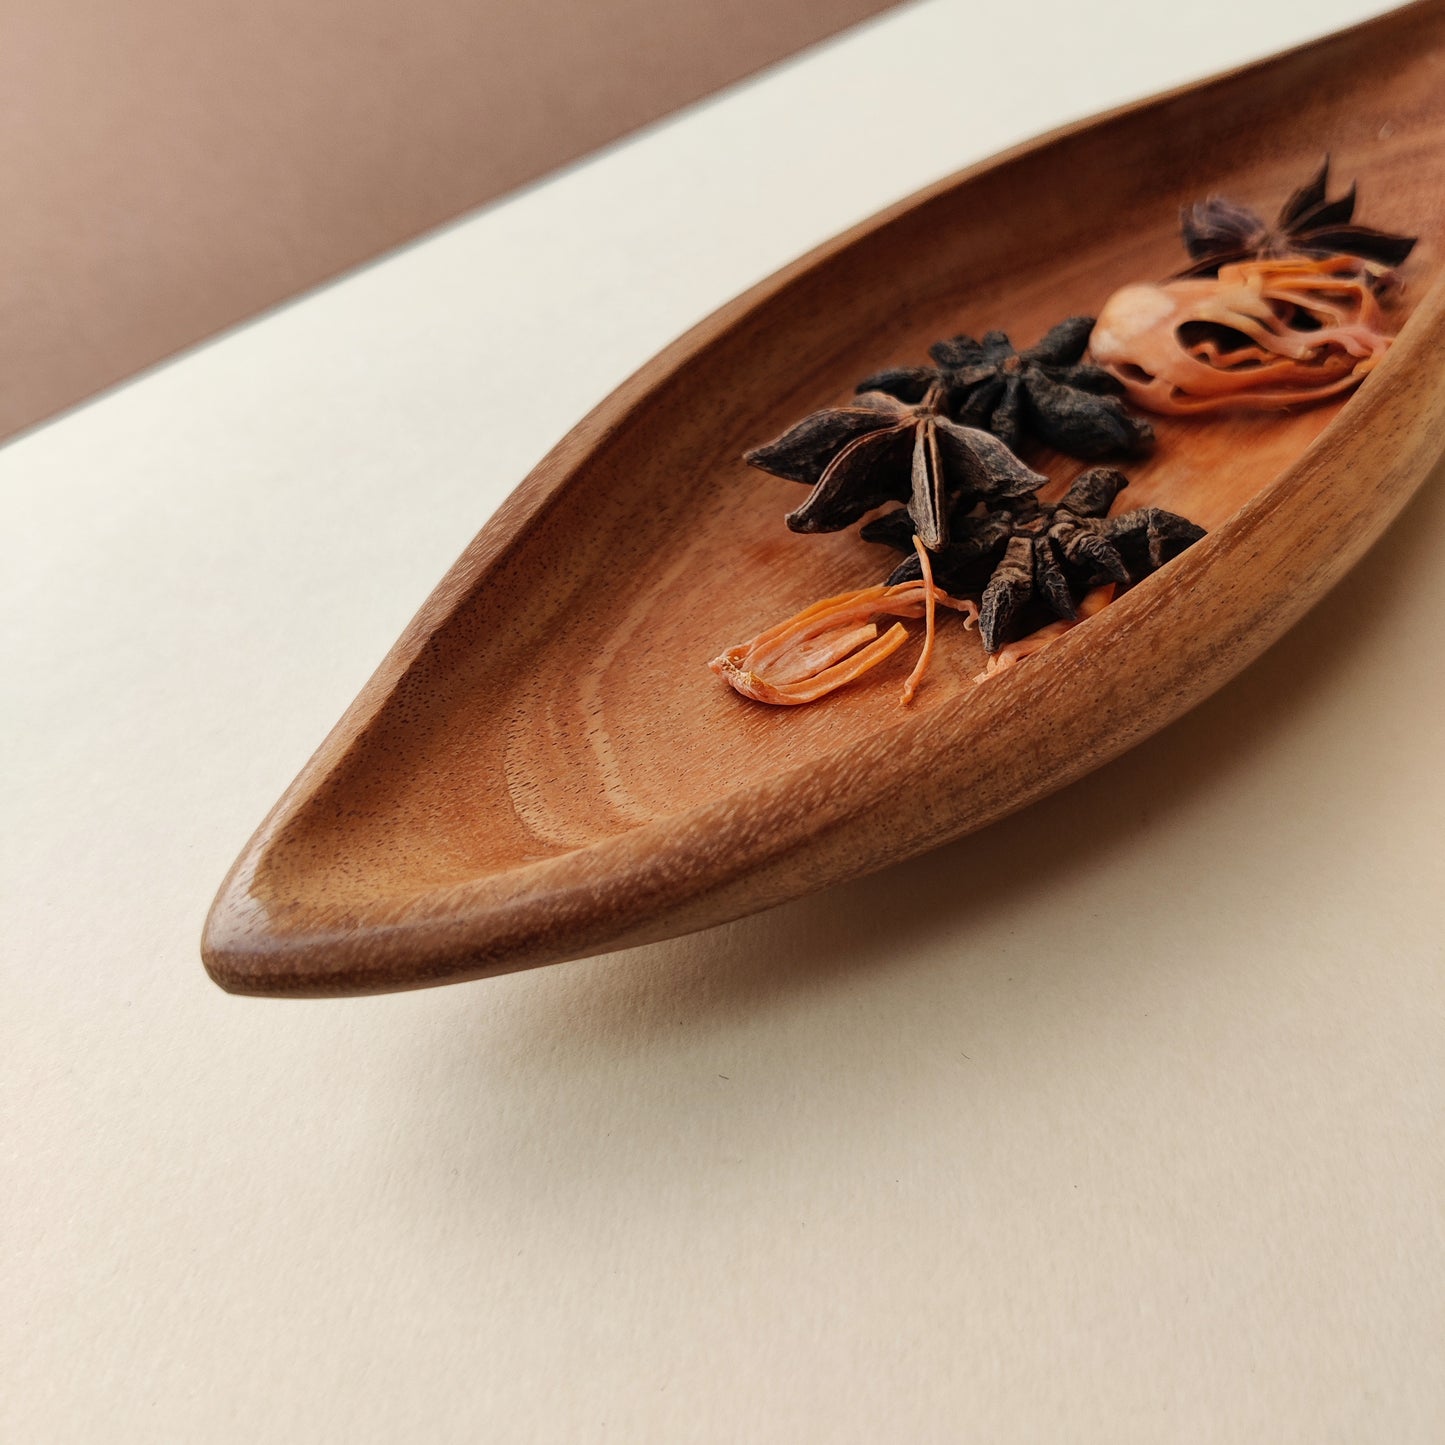 Brown Akashmoni Wood leaf Shaped Serving Platter